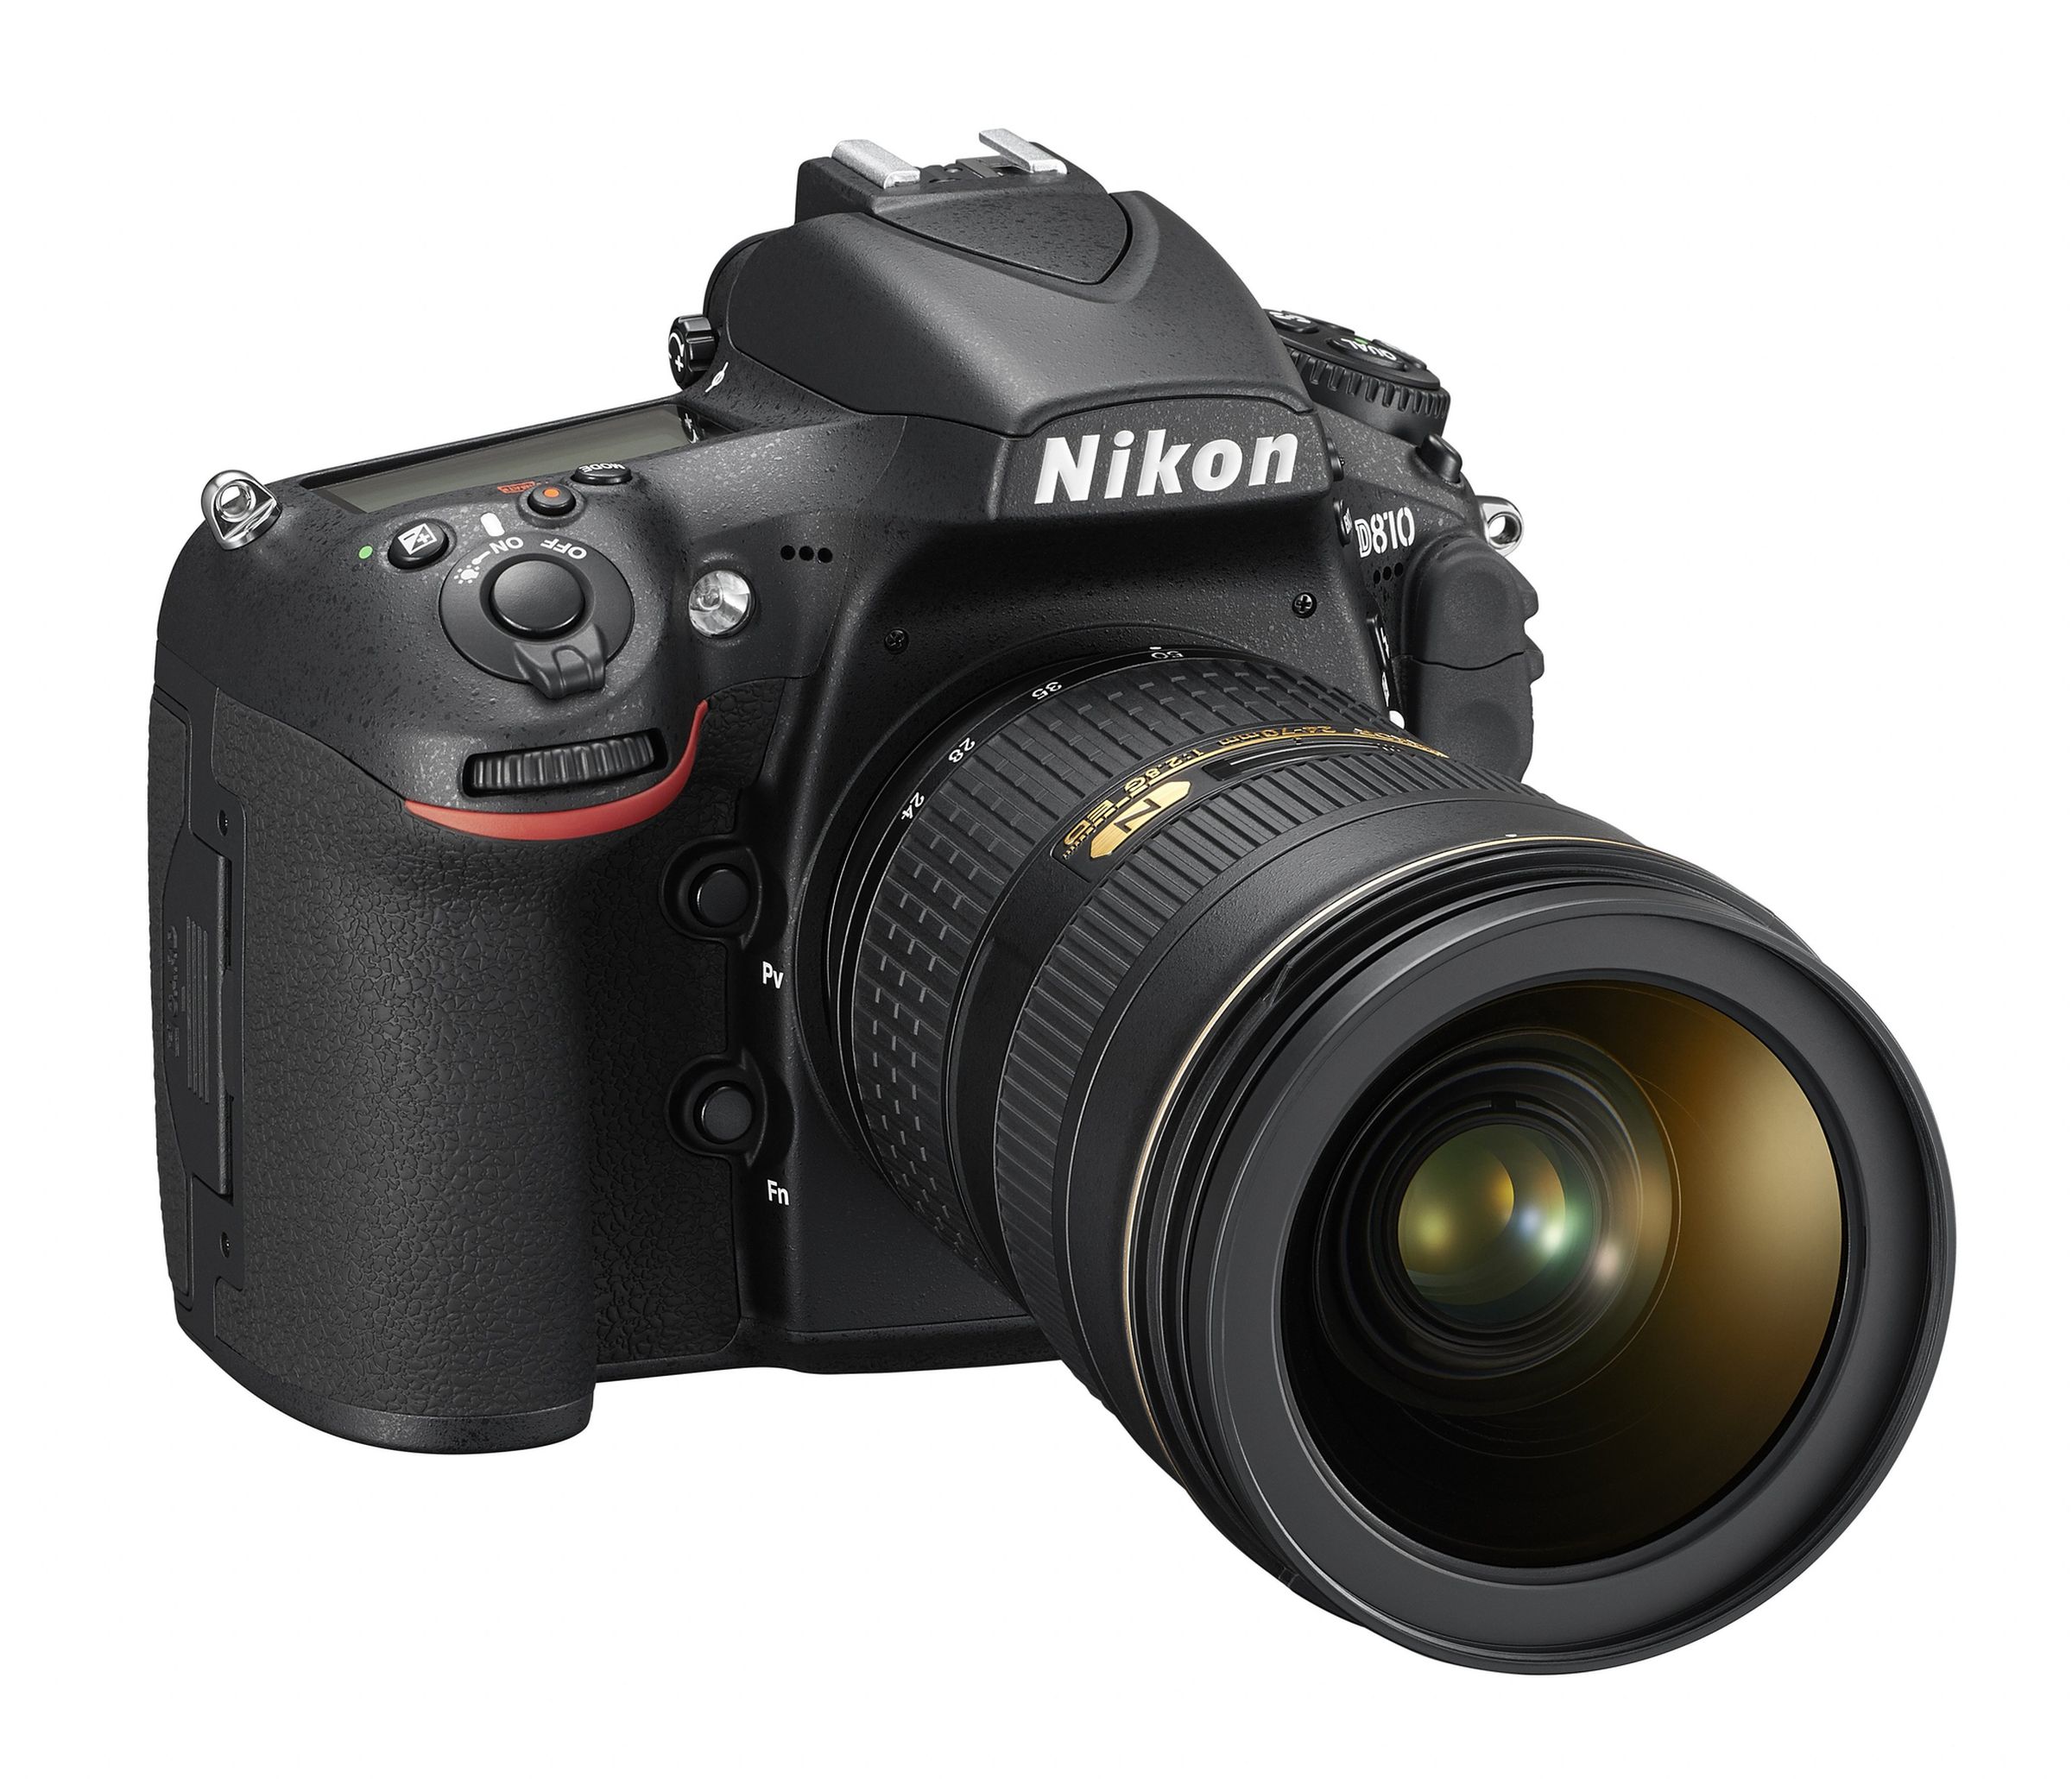 Nikon D810 press photo gallery